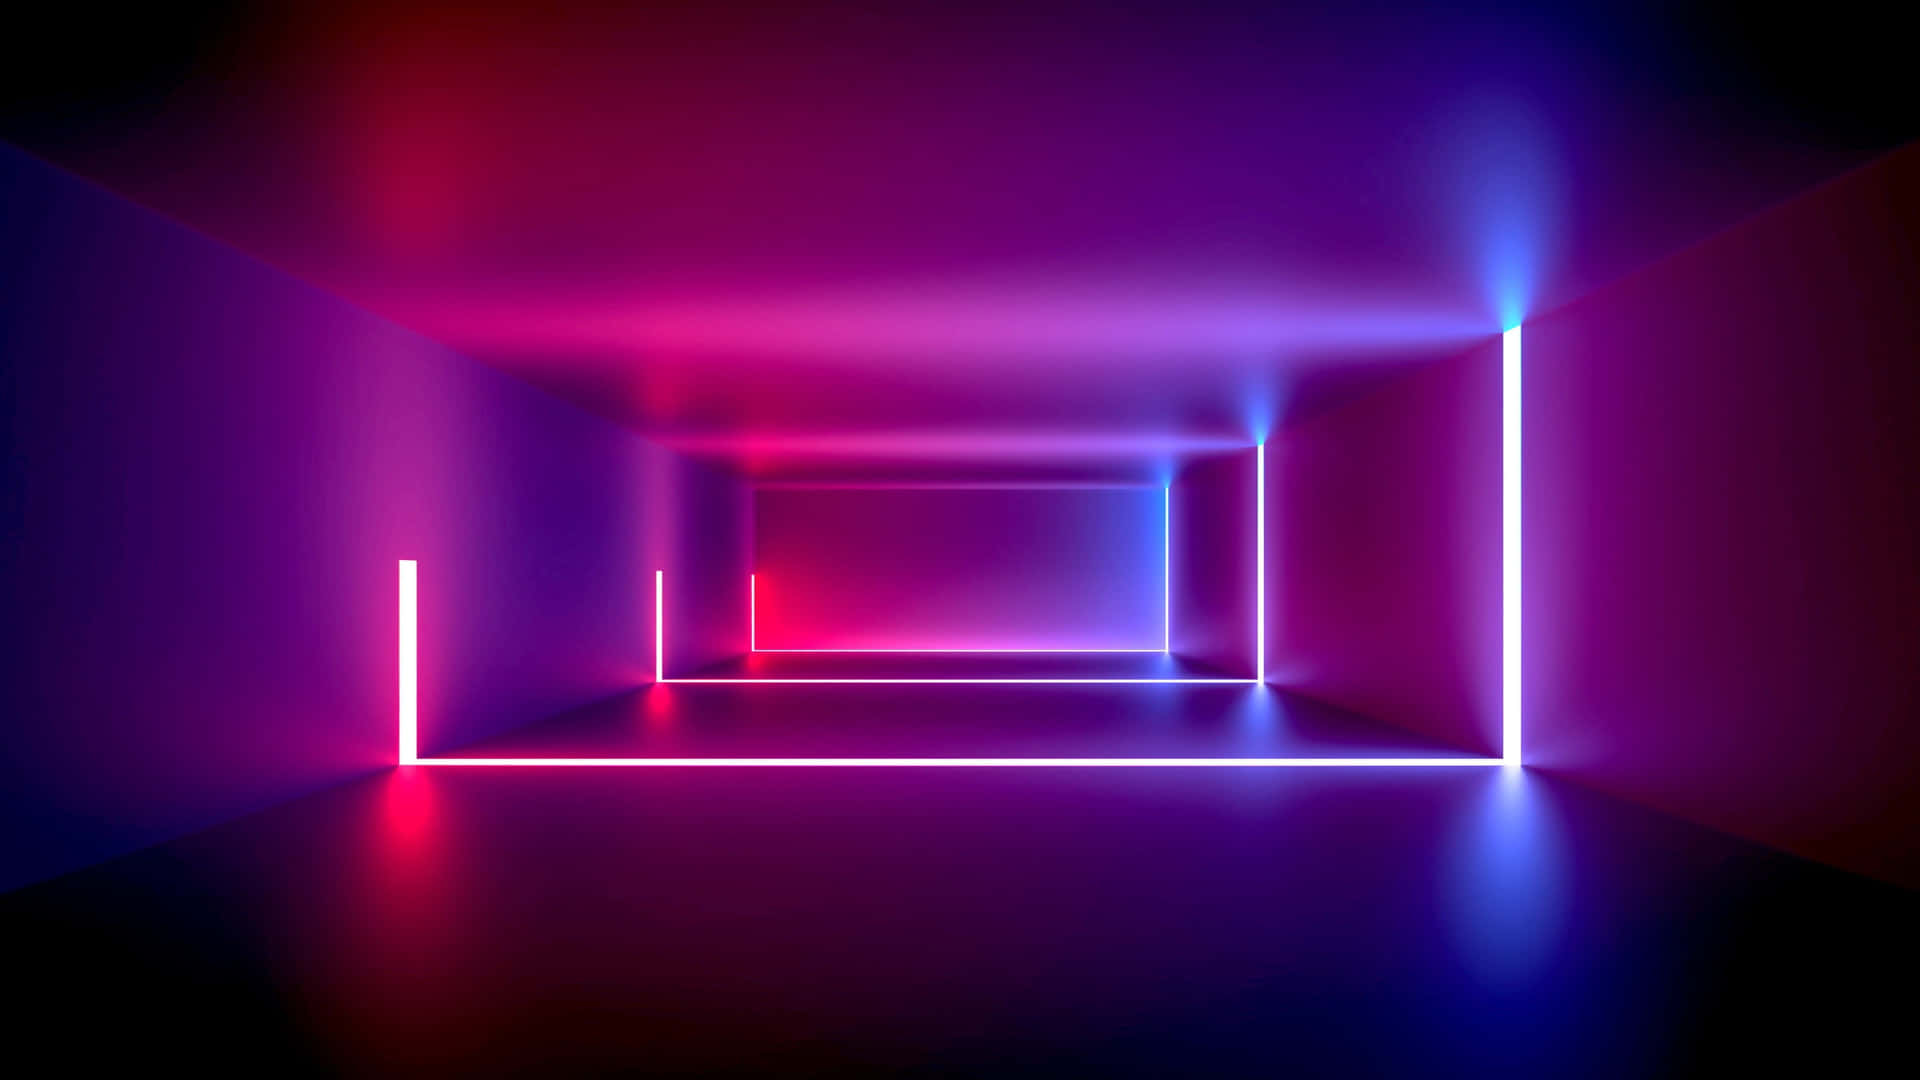 Abstract Neon Light Corridor.jpg Wallpaper